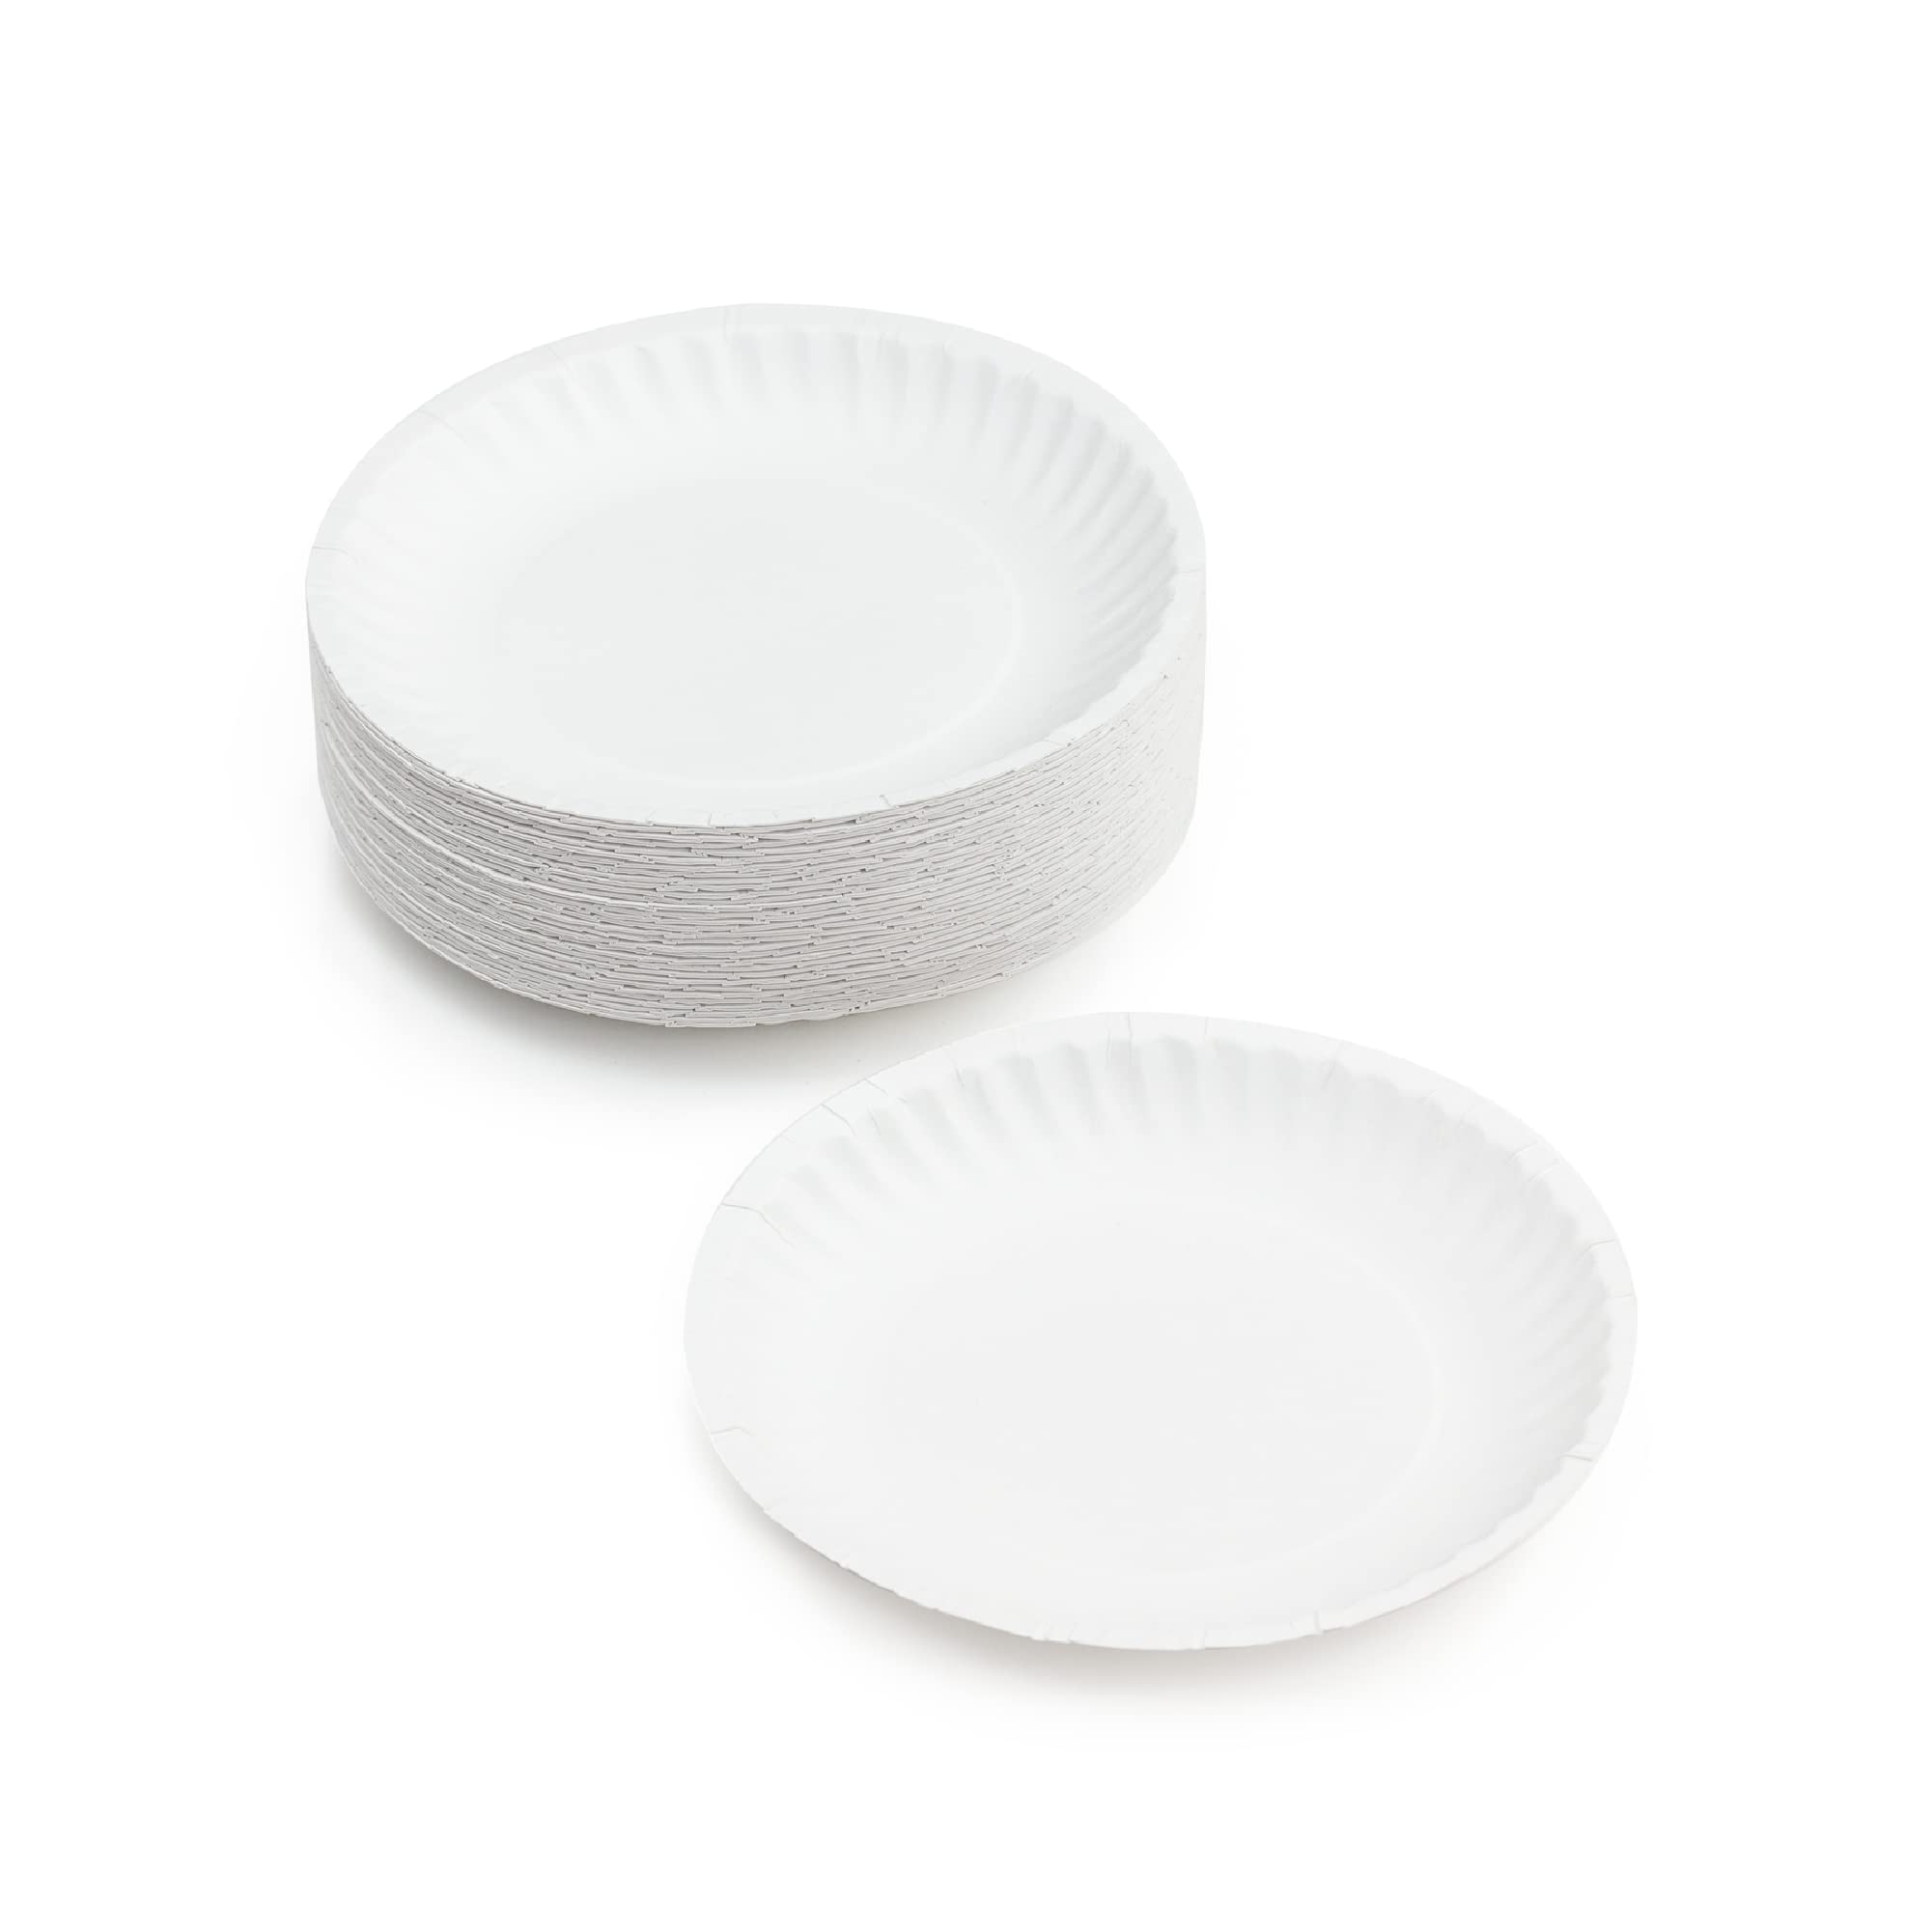 100% Compostable Disposable Paper Plates Bulk [7 1000 Pack